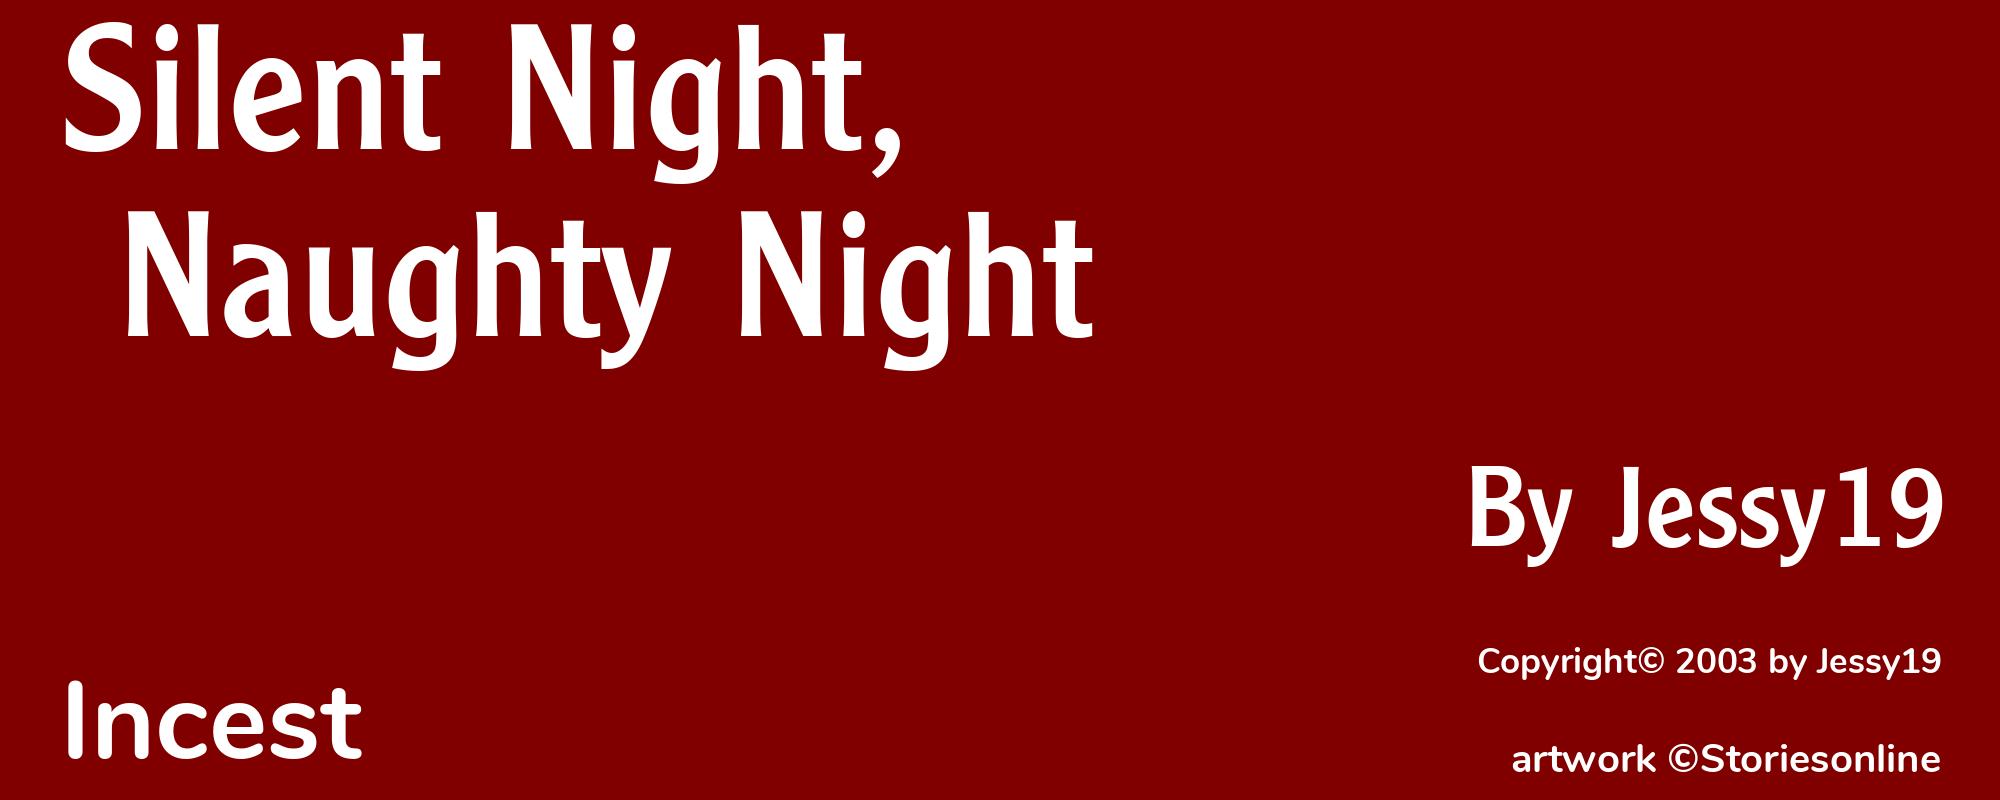 Silent Night, Naughty Night - Cover